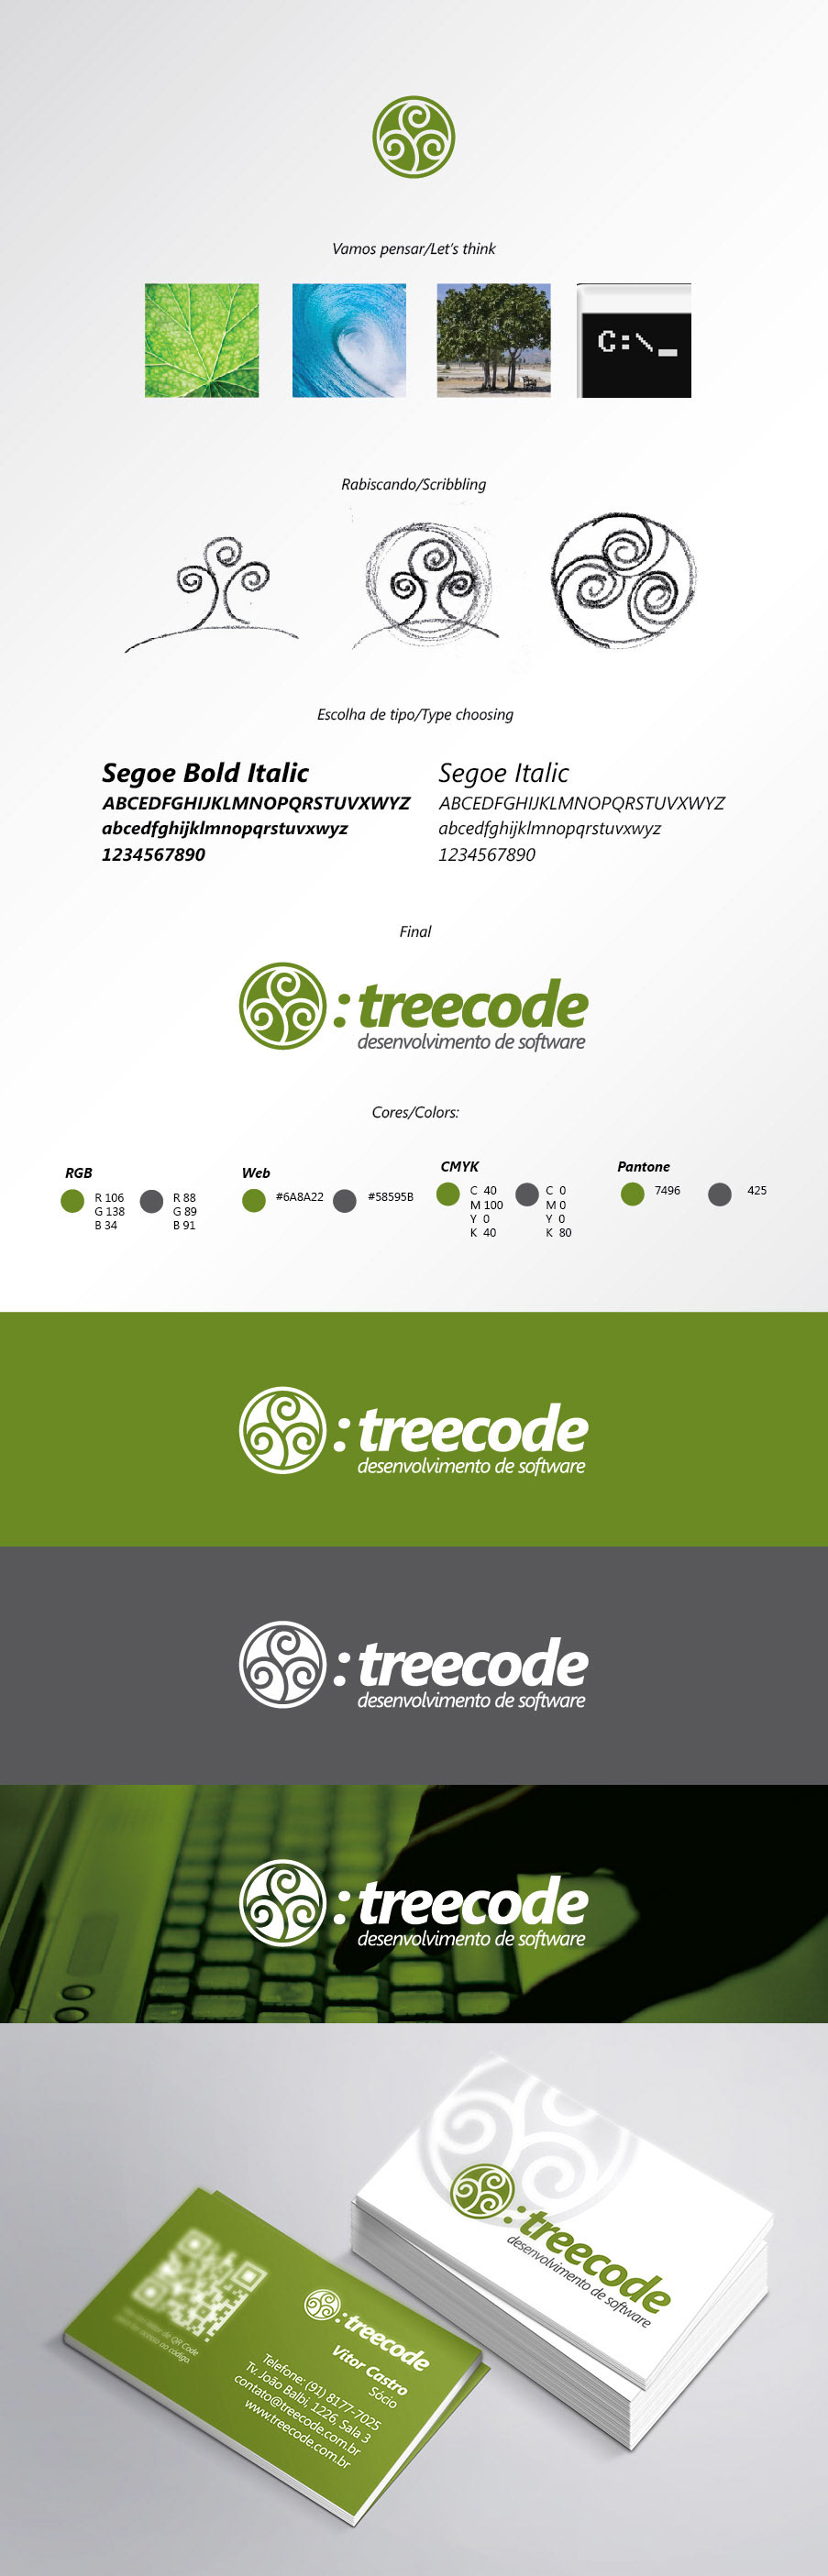 identity Technology organic design treecode